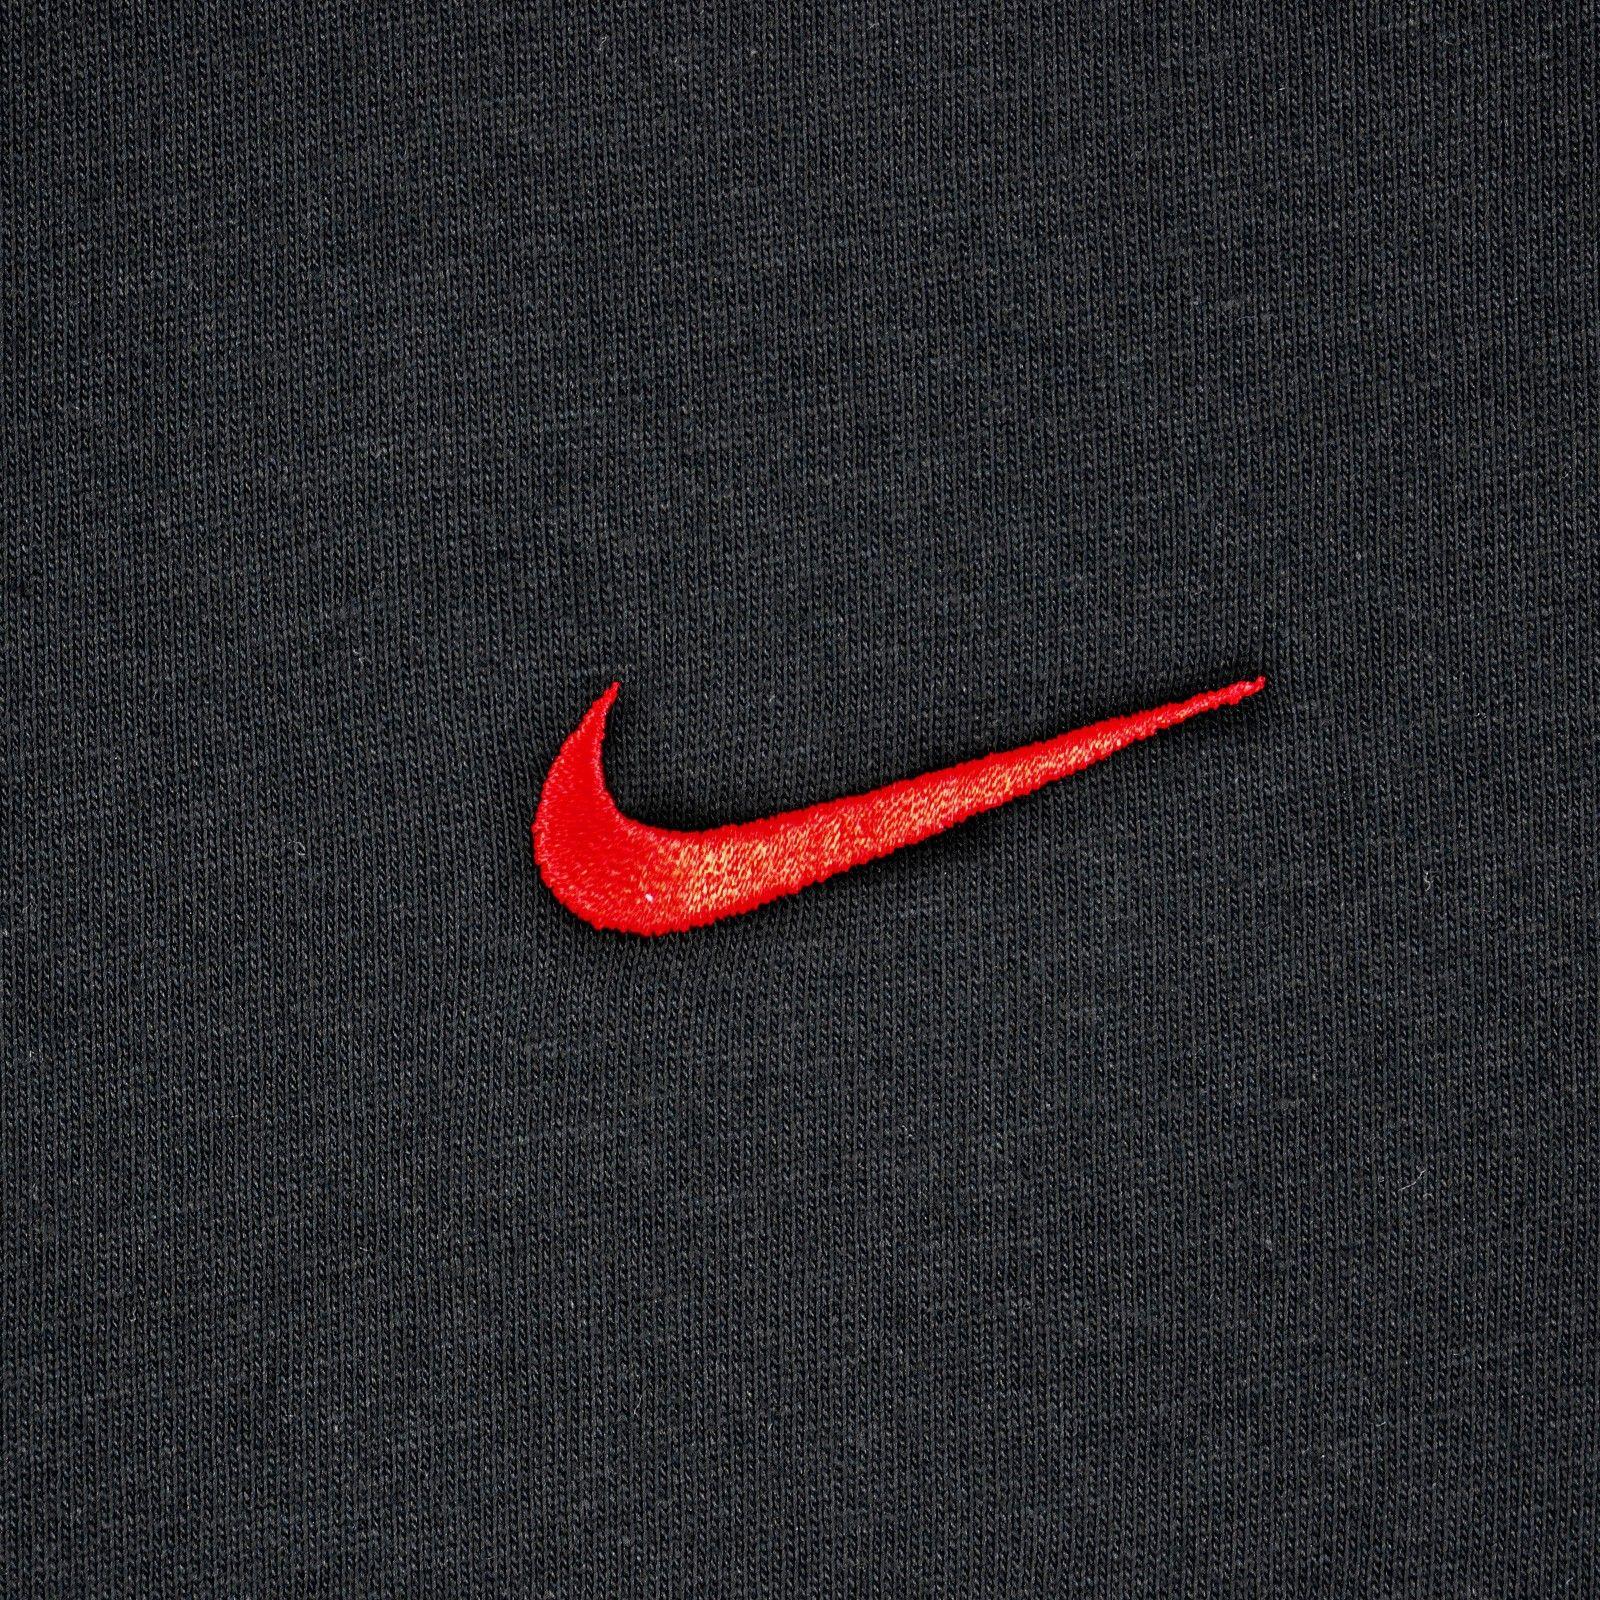 Red and Black Nike Logo - Nike Basic Swoosh Tee Men's Casual Sports Cotton T Shirt Tennis